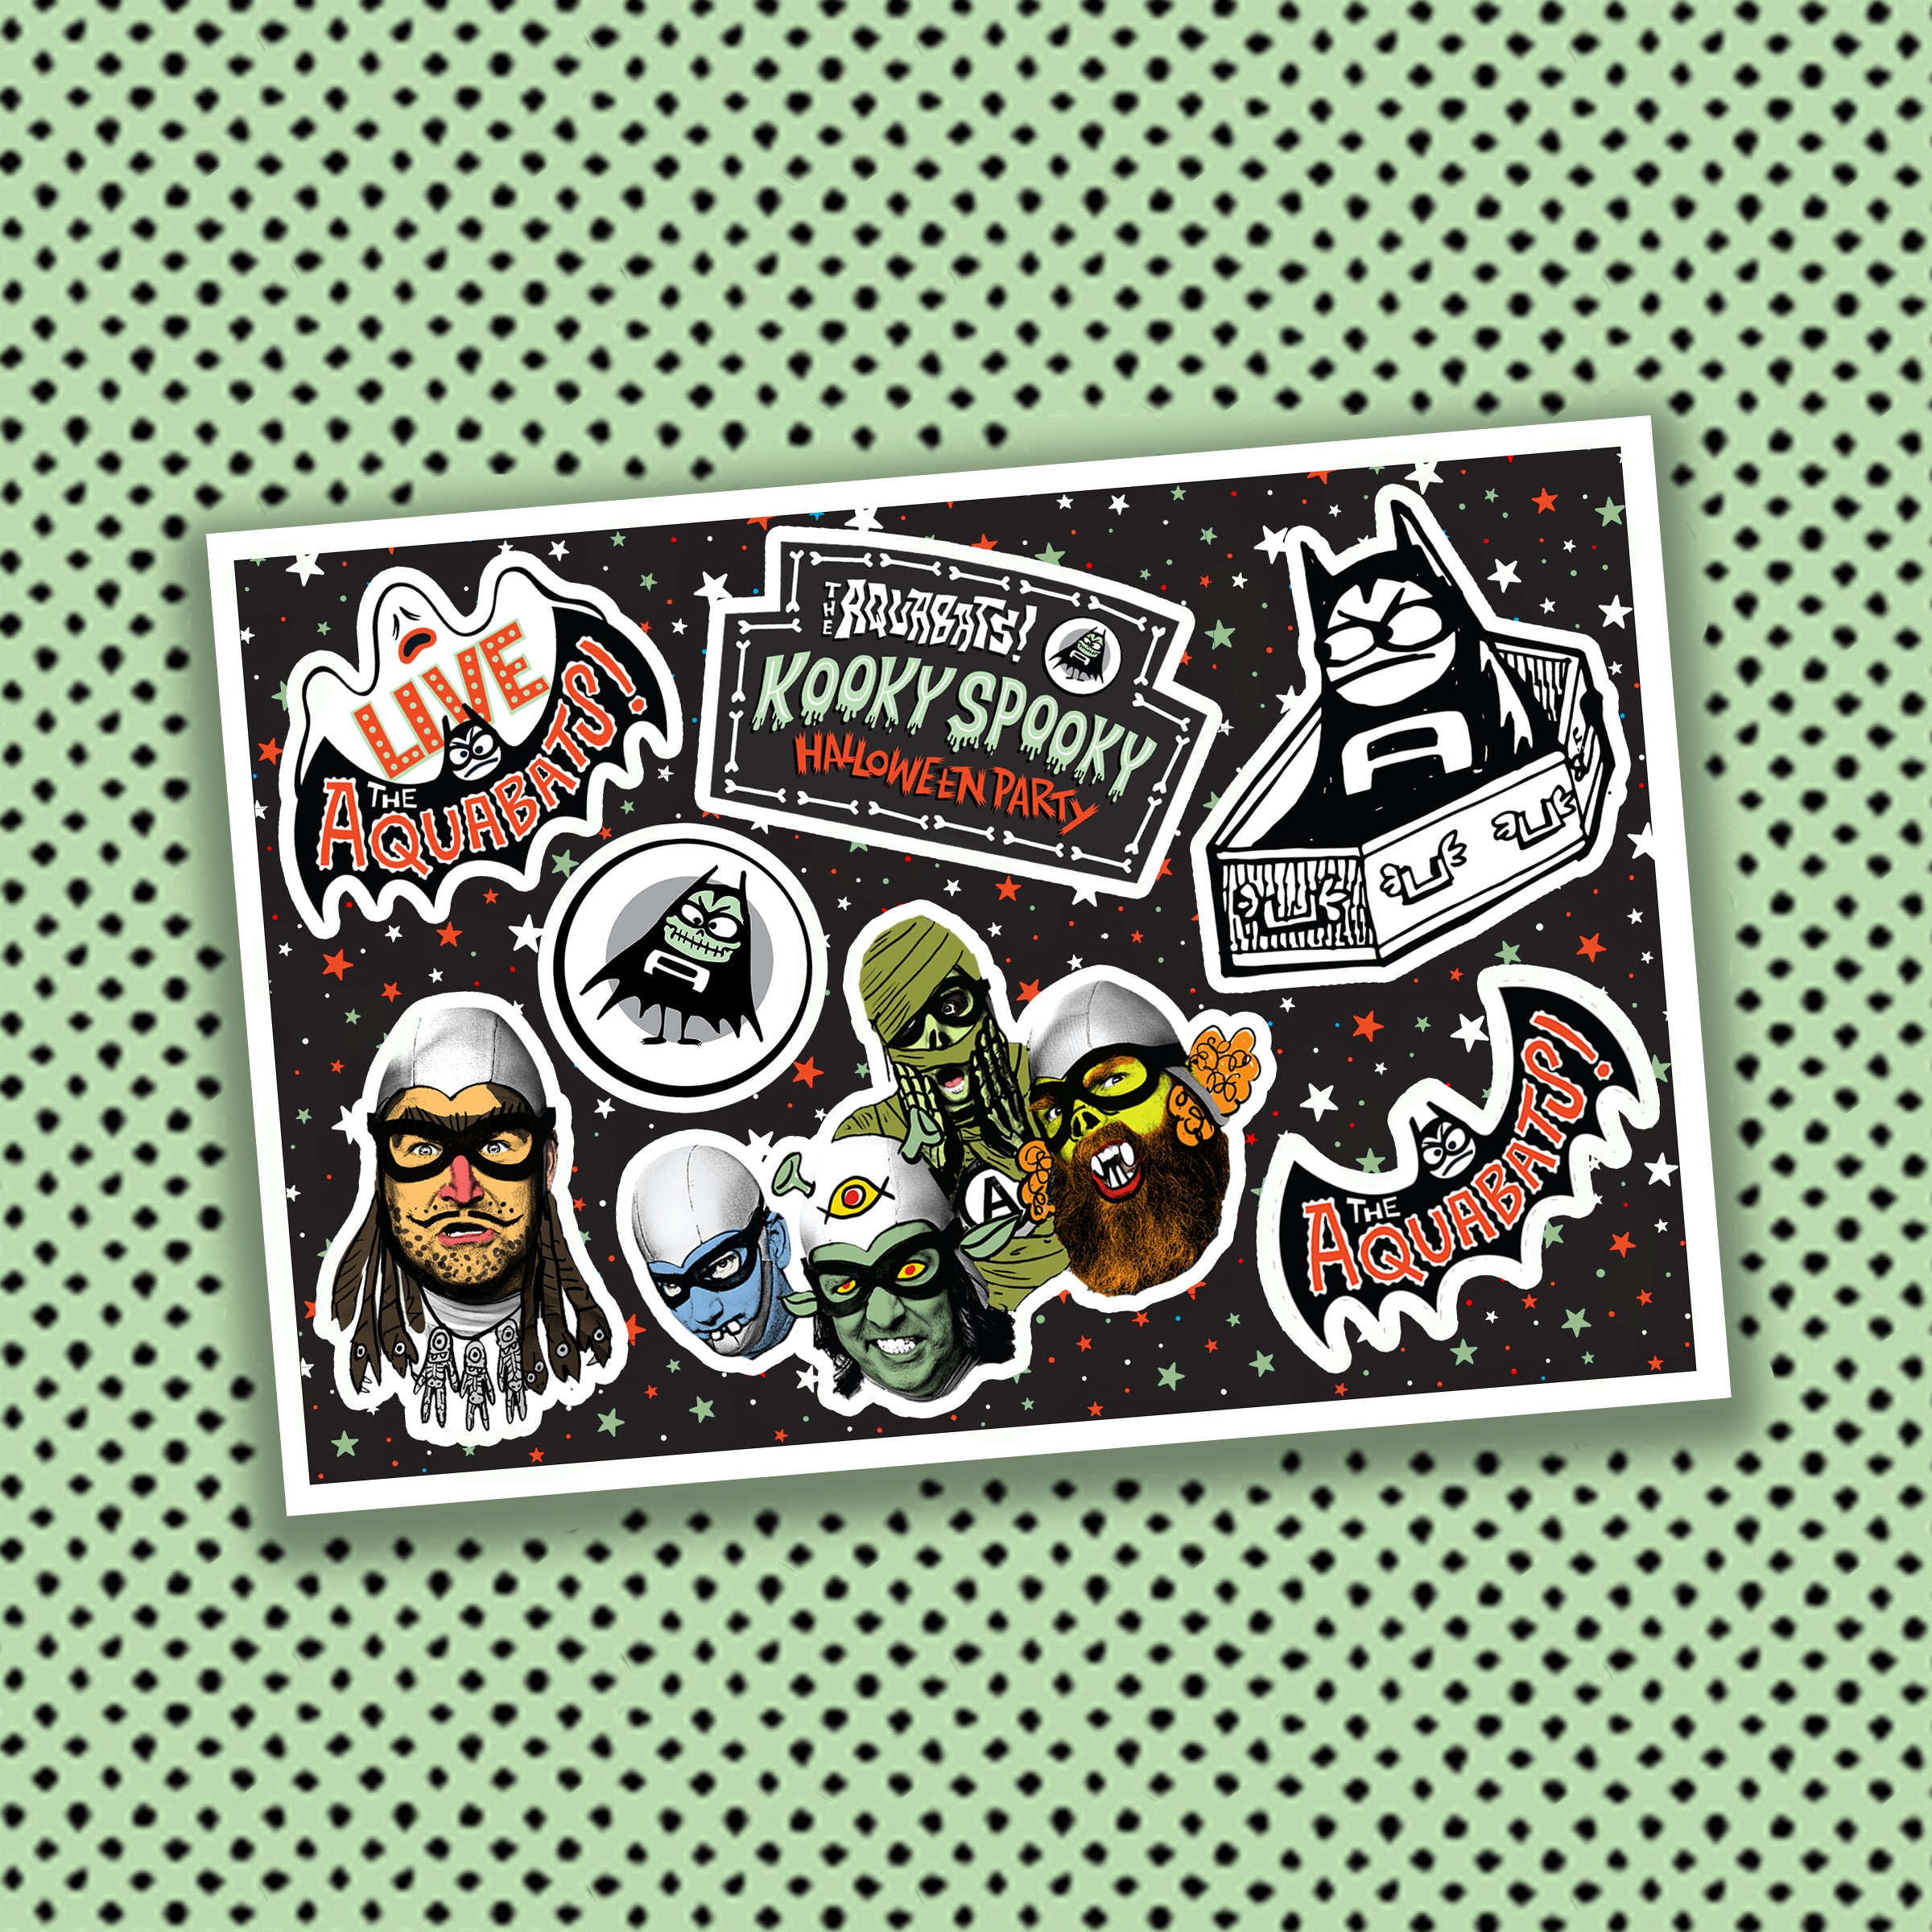 The Aquabats! Kooky Spooky! Halloween Party! Sticker Sheet!